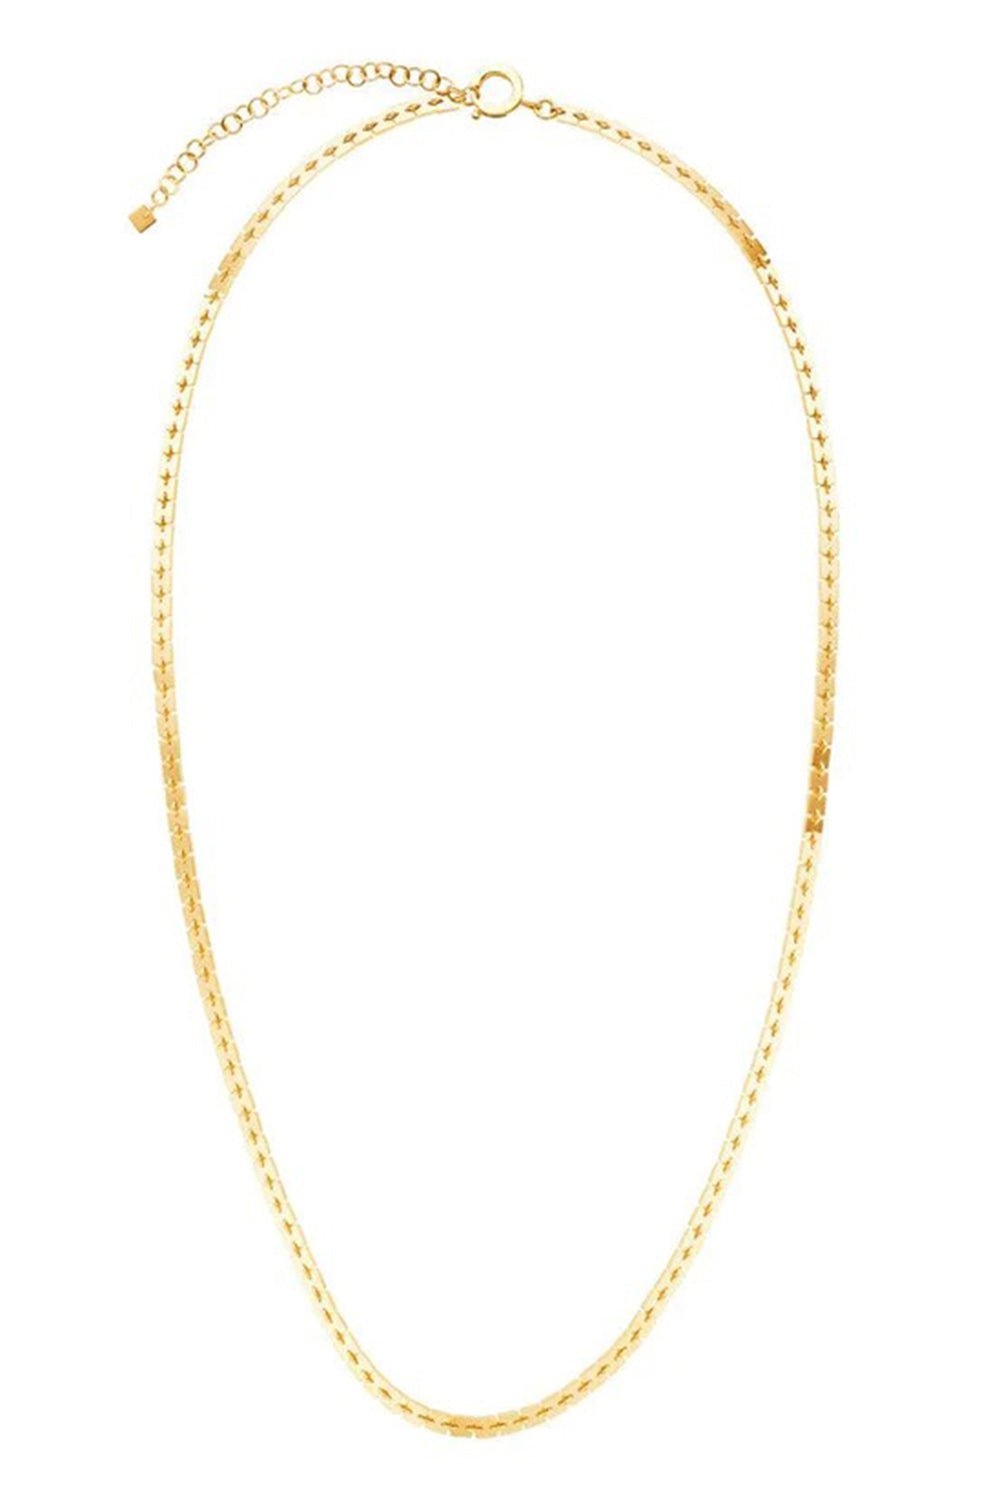 CADAR-Medium Foundation Chain Necklace-YELLOW GOLD